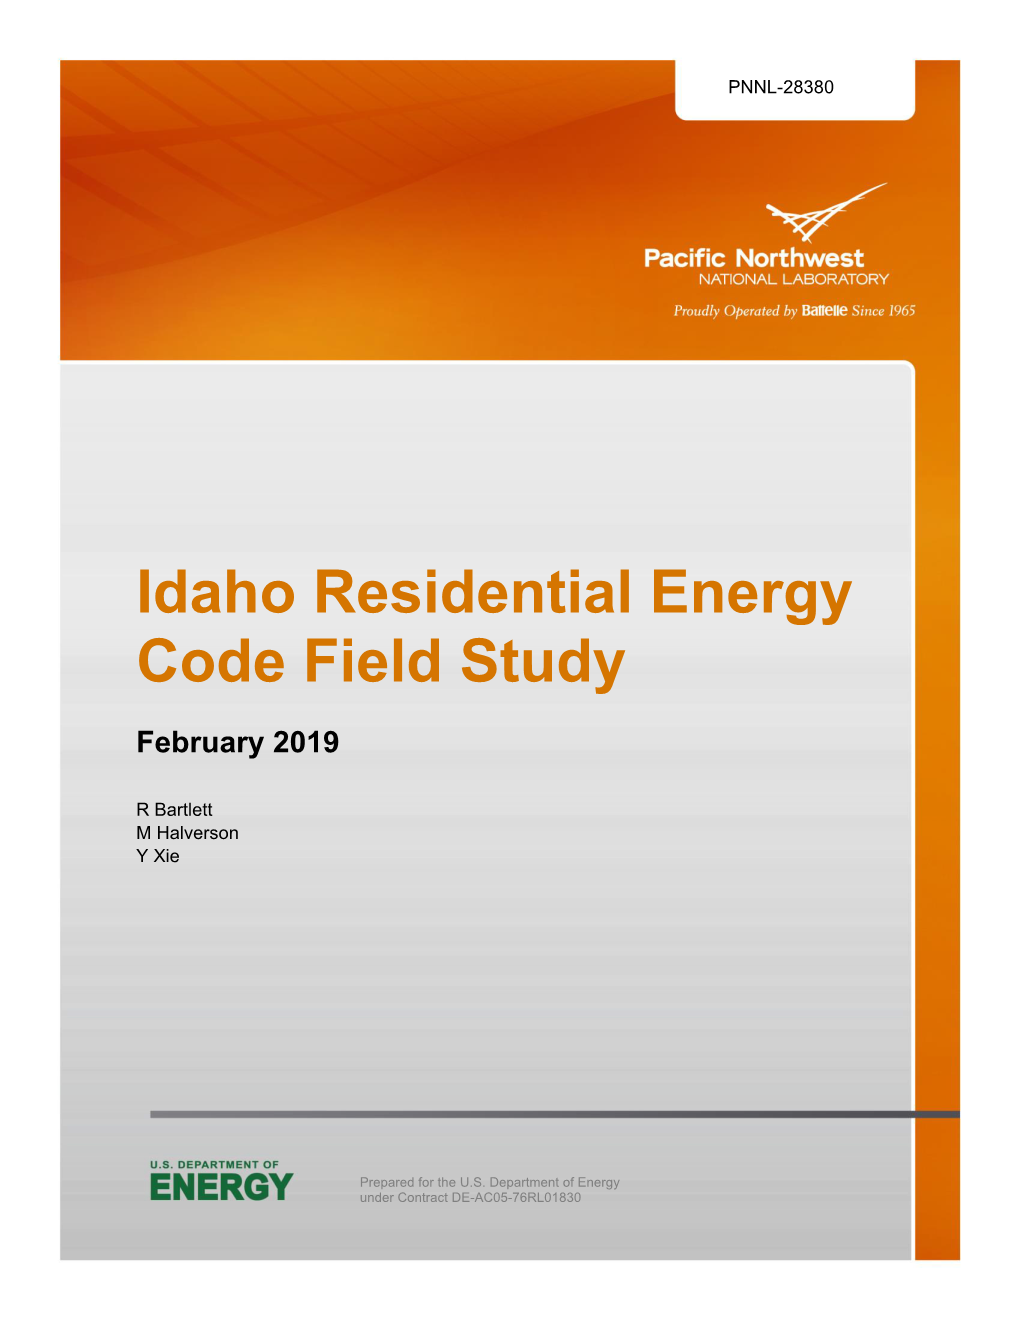 Idaho Residential Energy Code Field Study